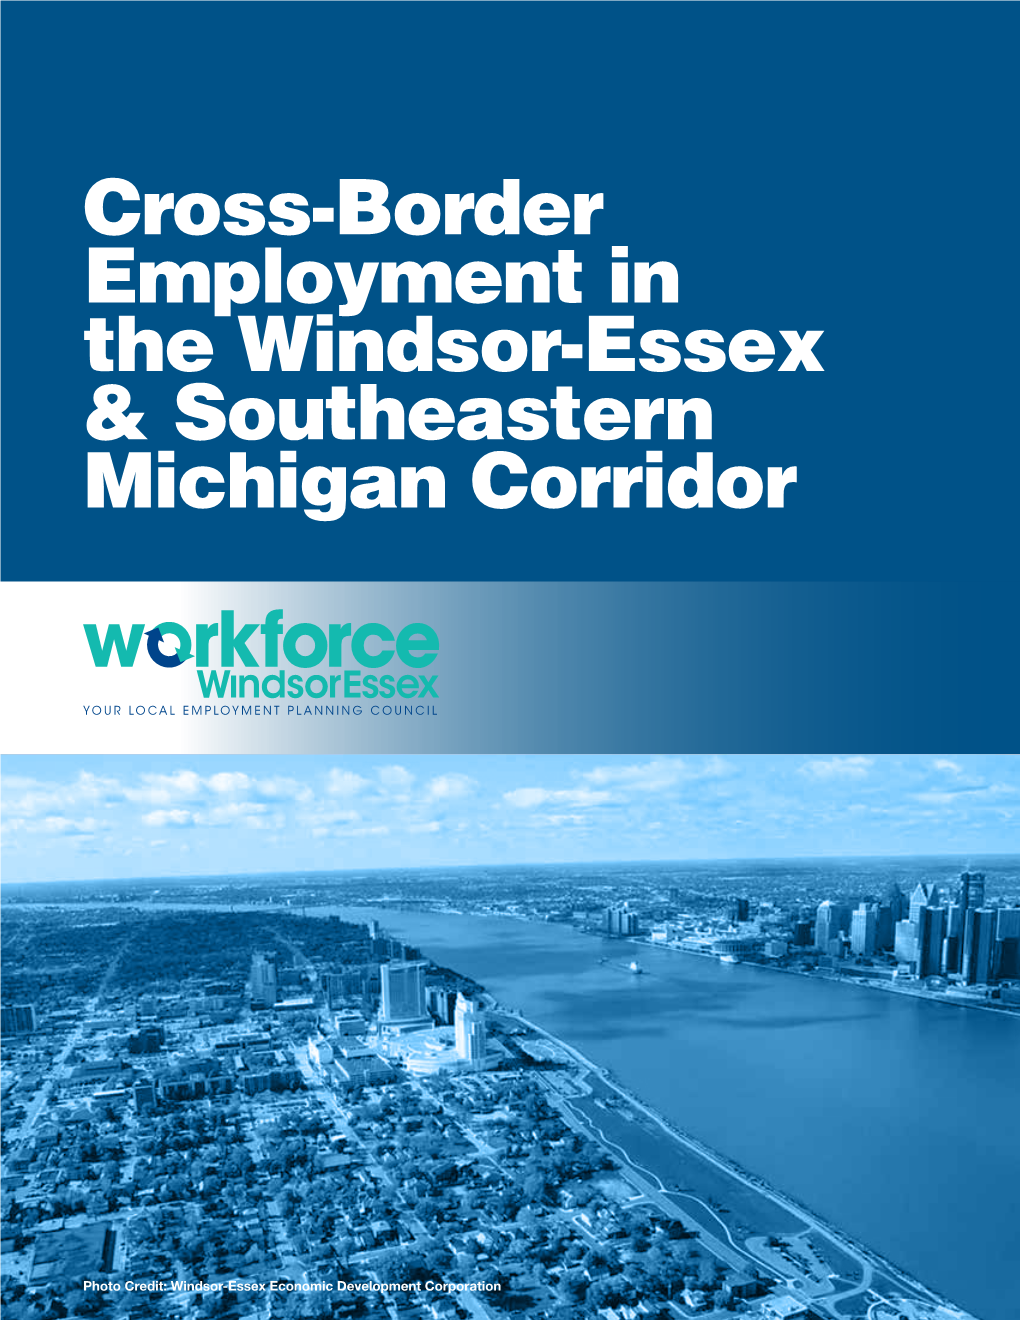 Cross-Border Employment in the Windsor-Essex & Southeastern